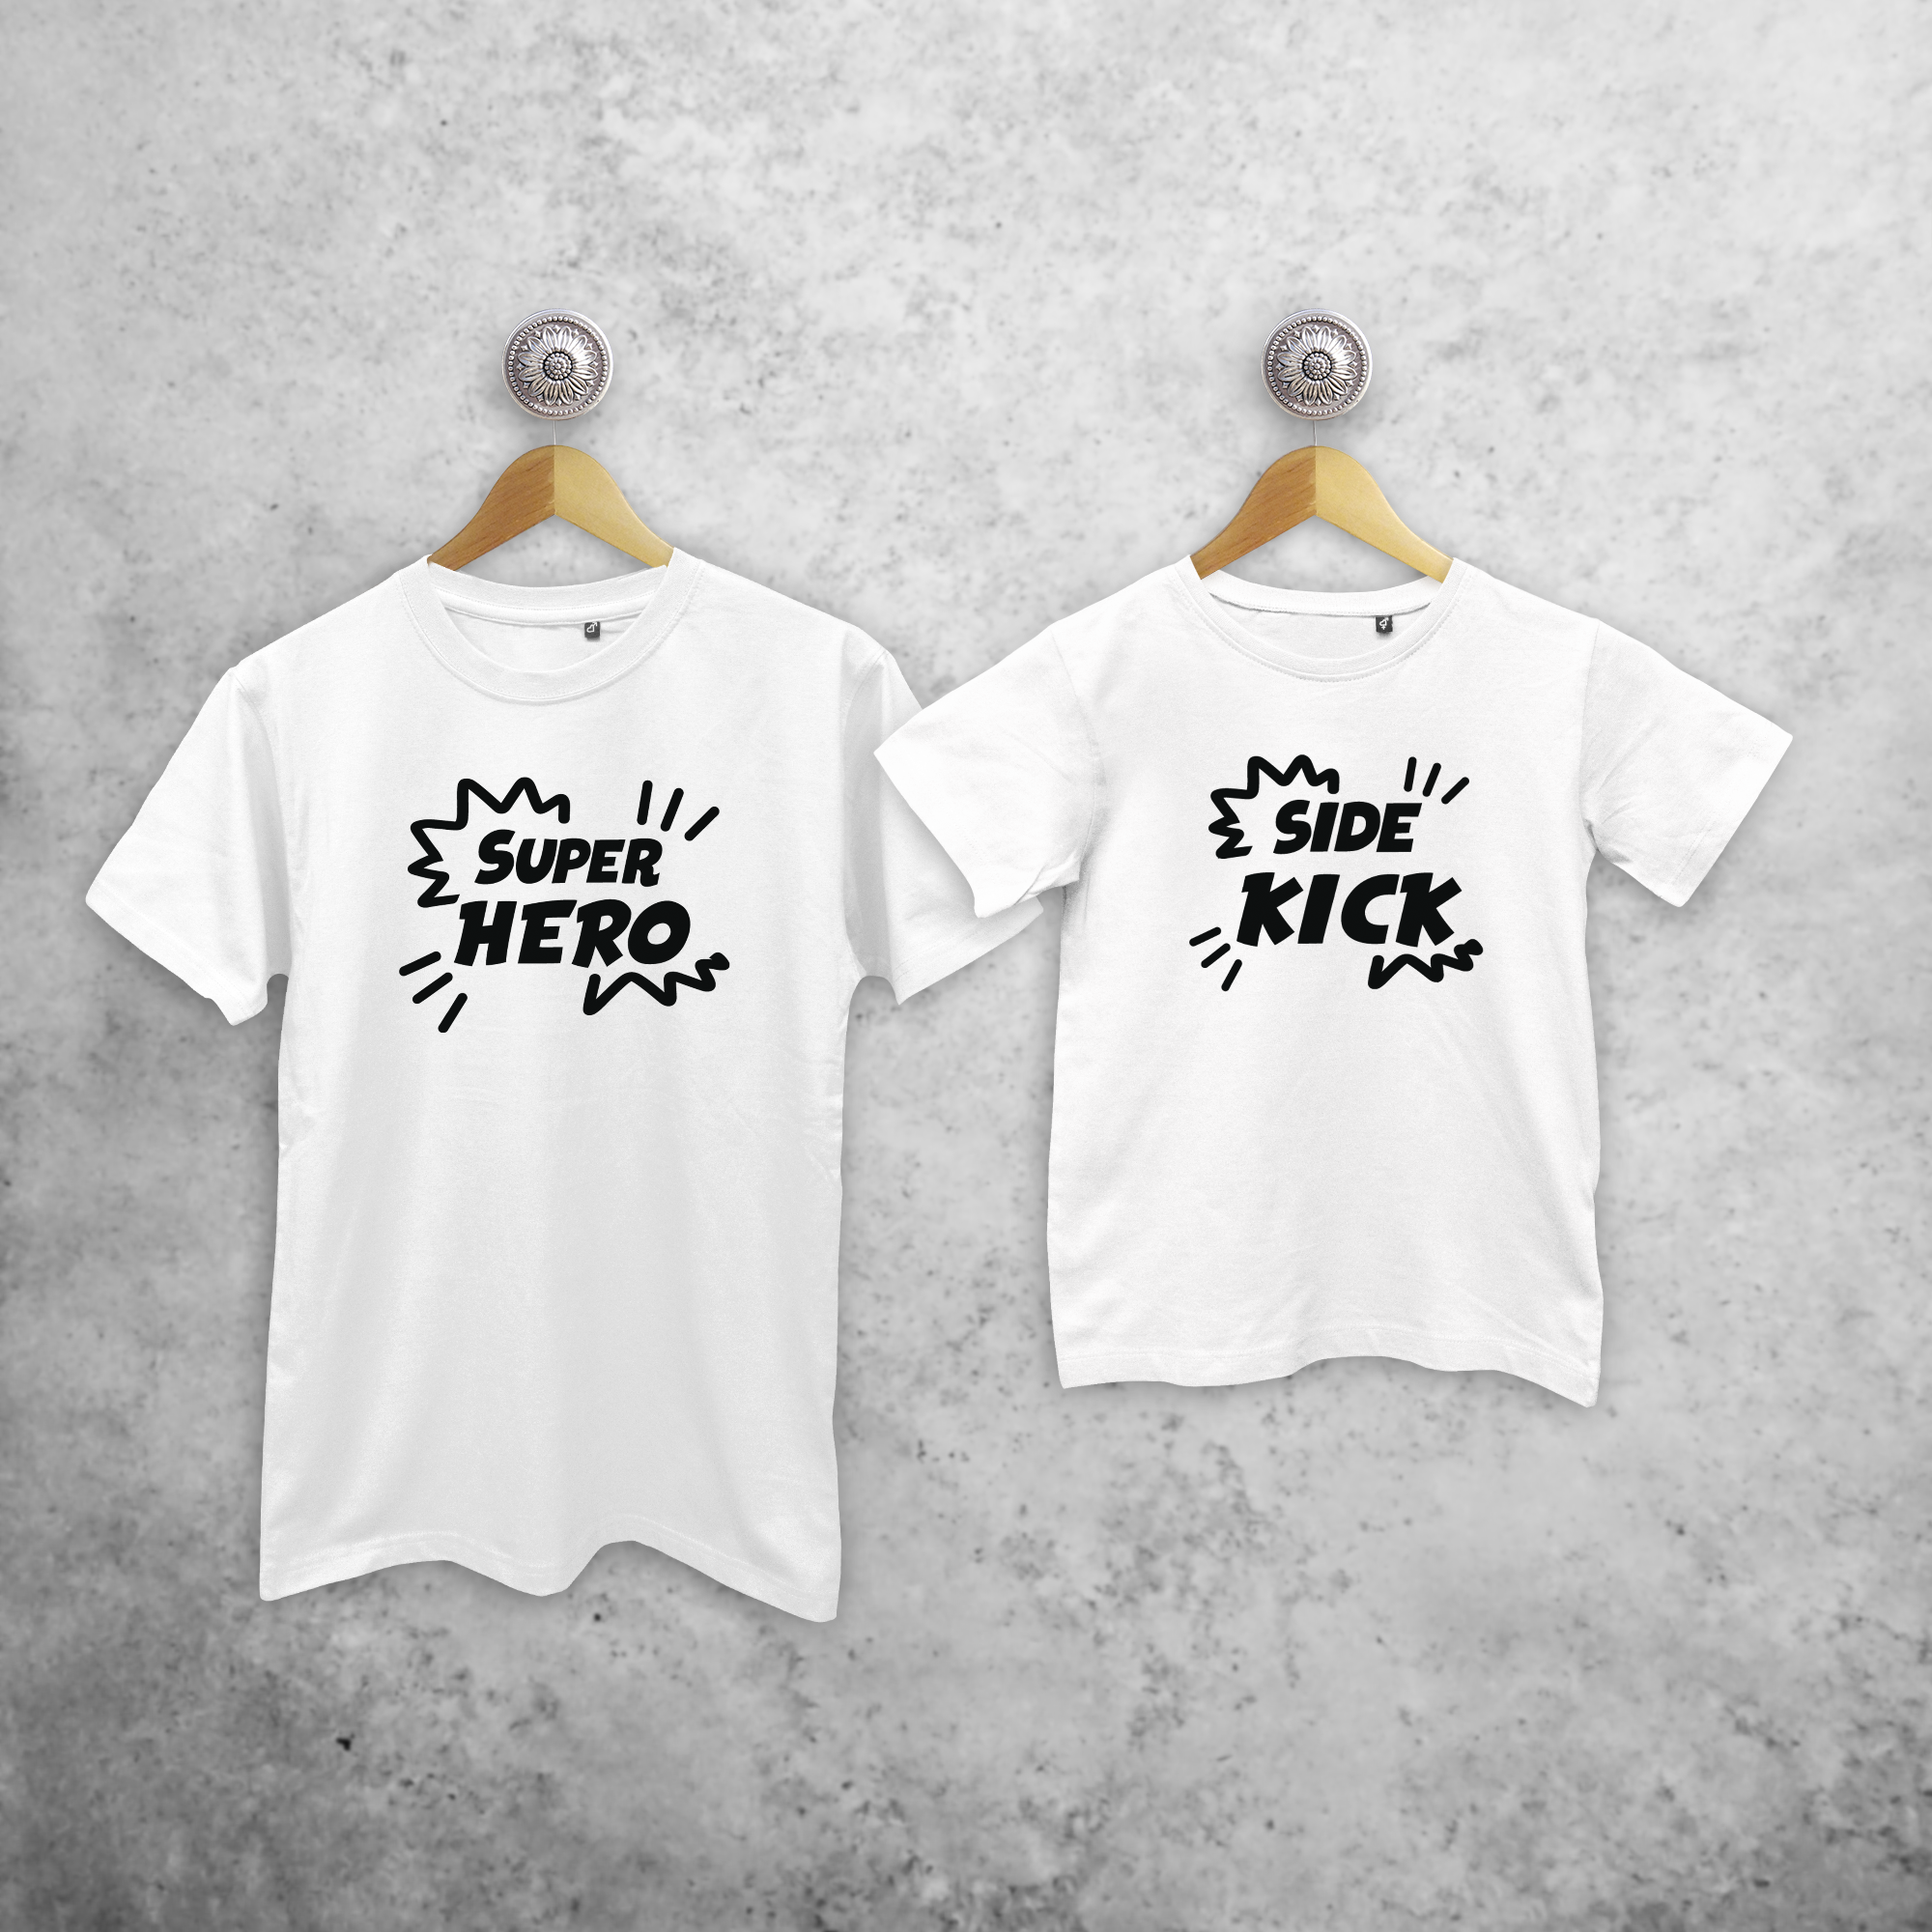 'Super hero' & 'Side kick' matchende shirts